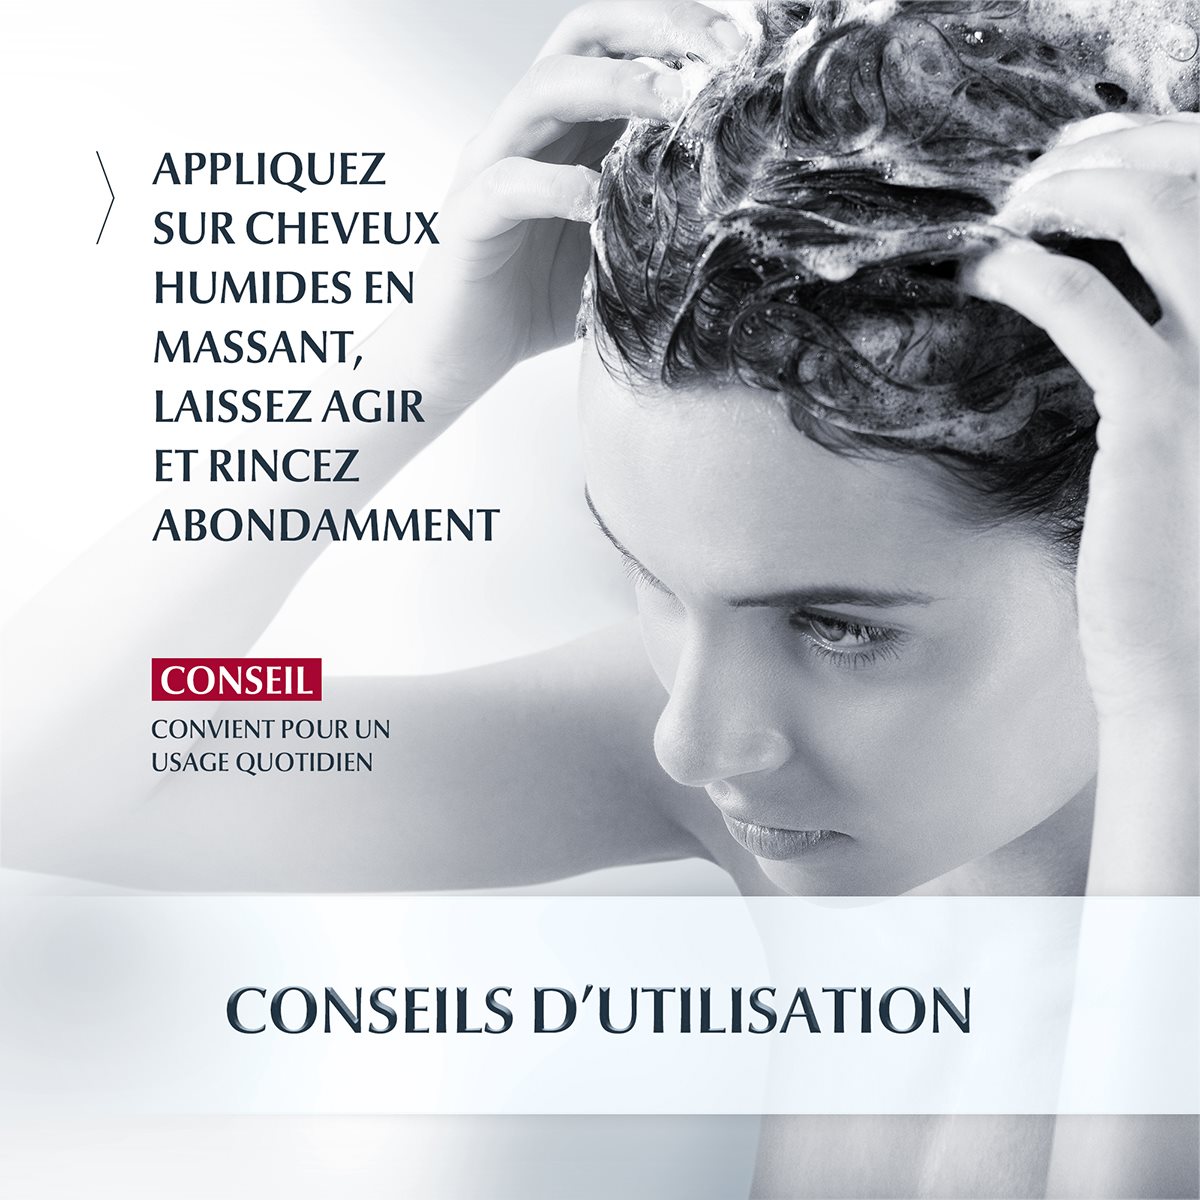 shampooing Doux pH5 DermoCapillaire pour cuir chevelu sensible